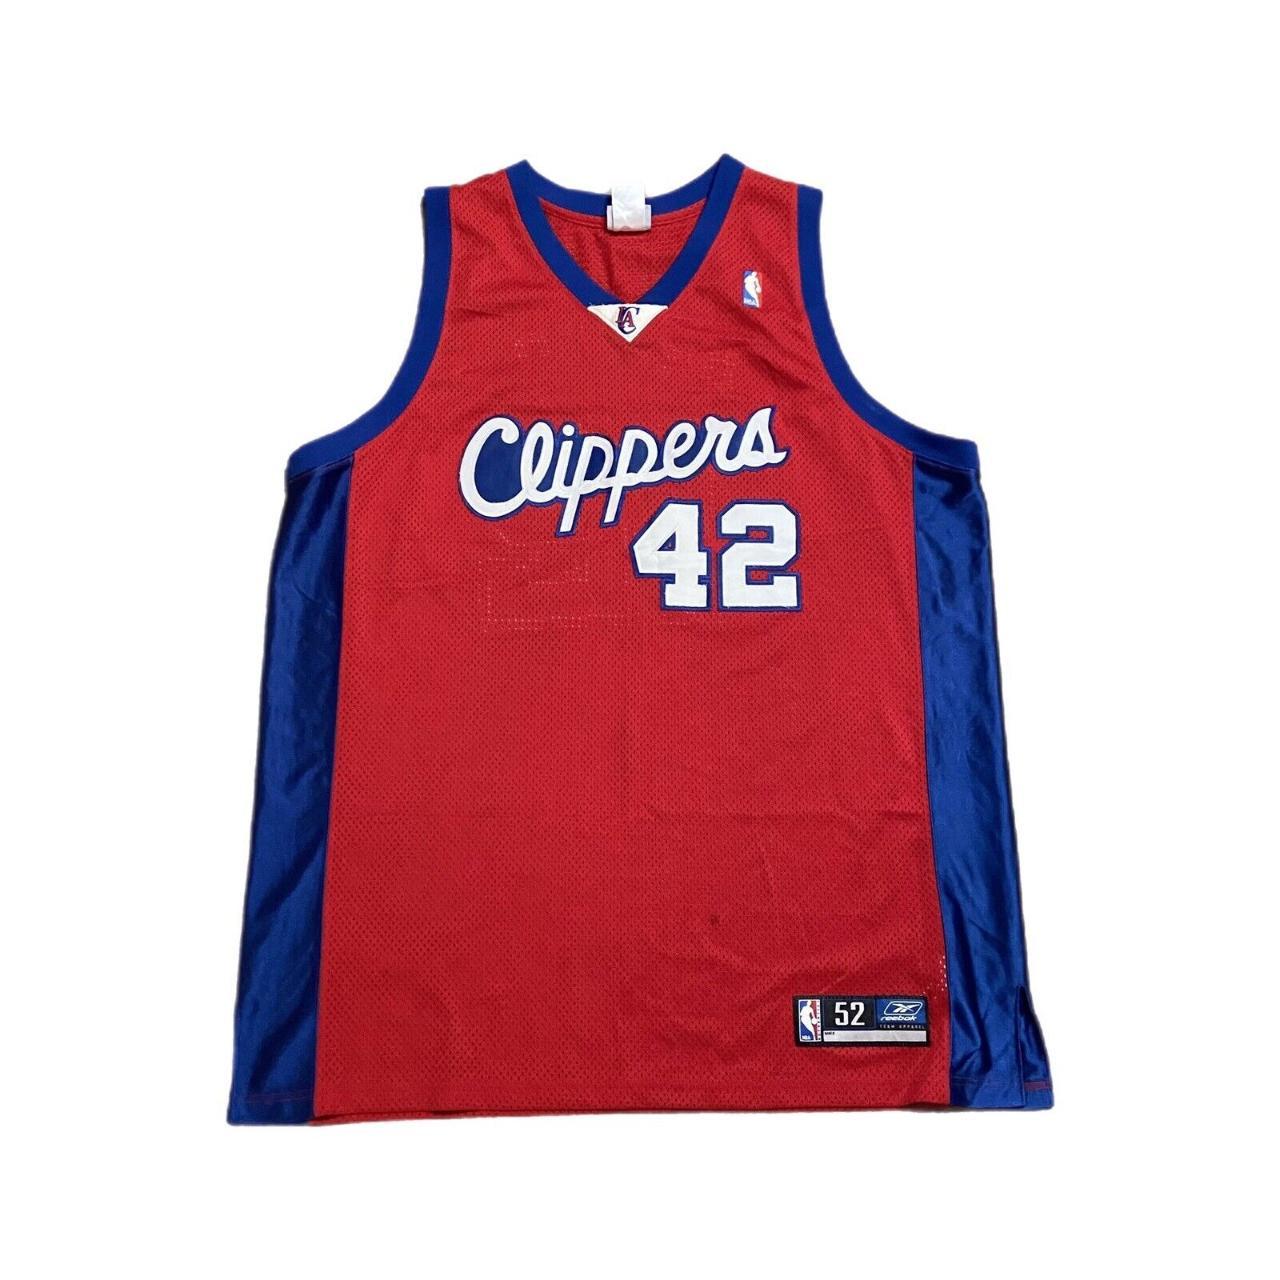 Los Angeles Clippers warm up jersey by Reebok - Depop